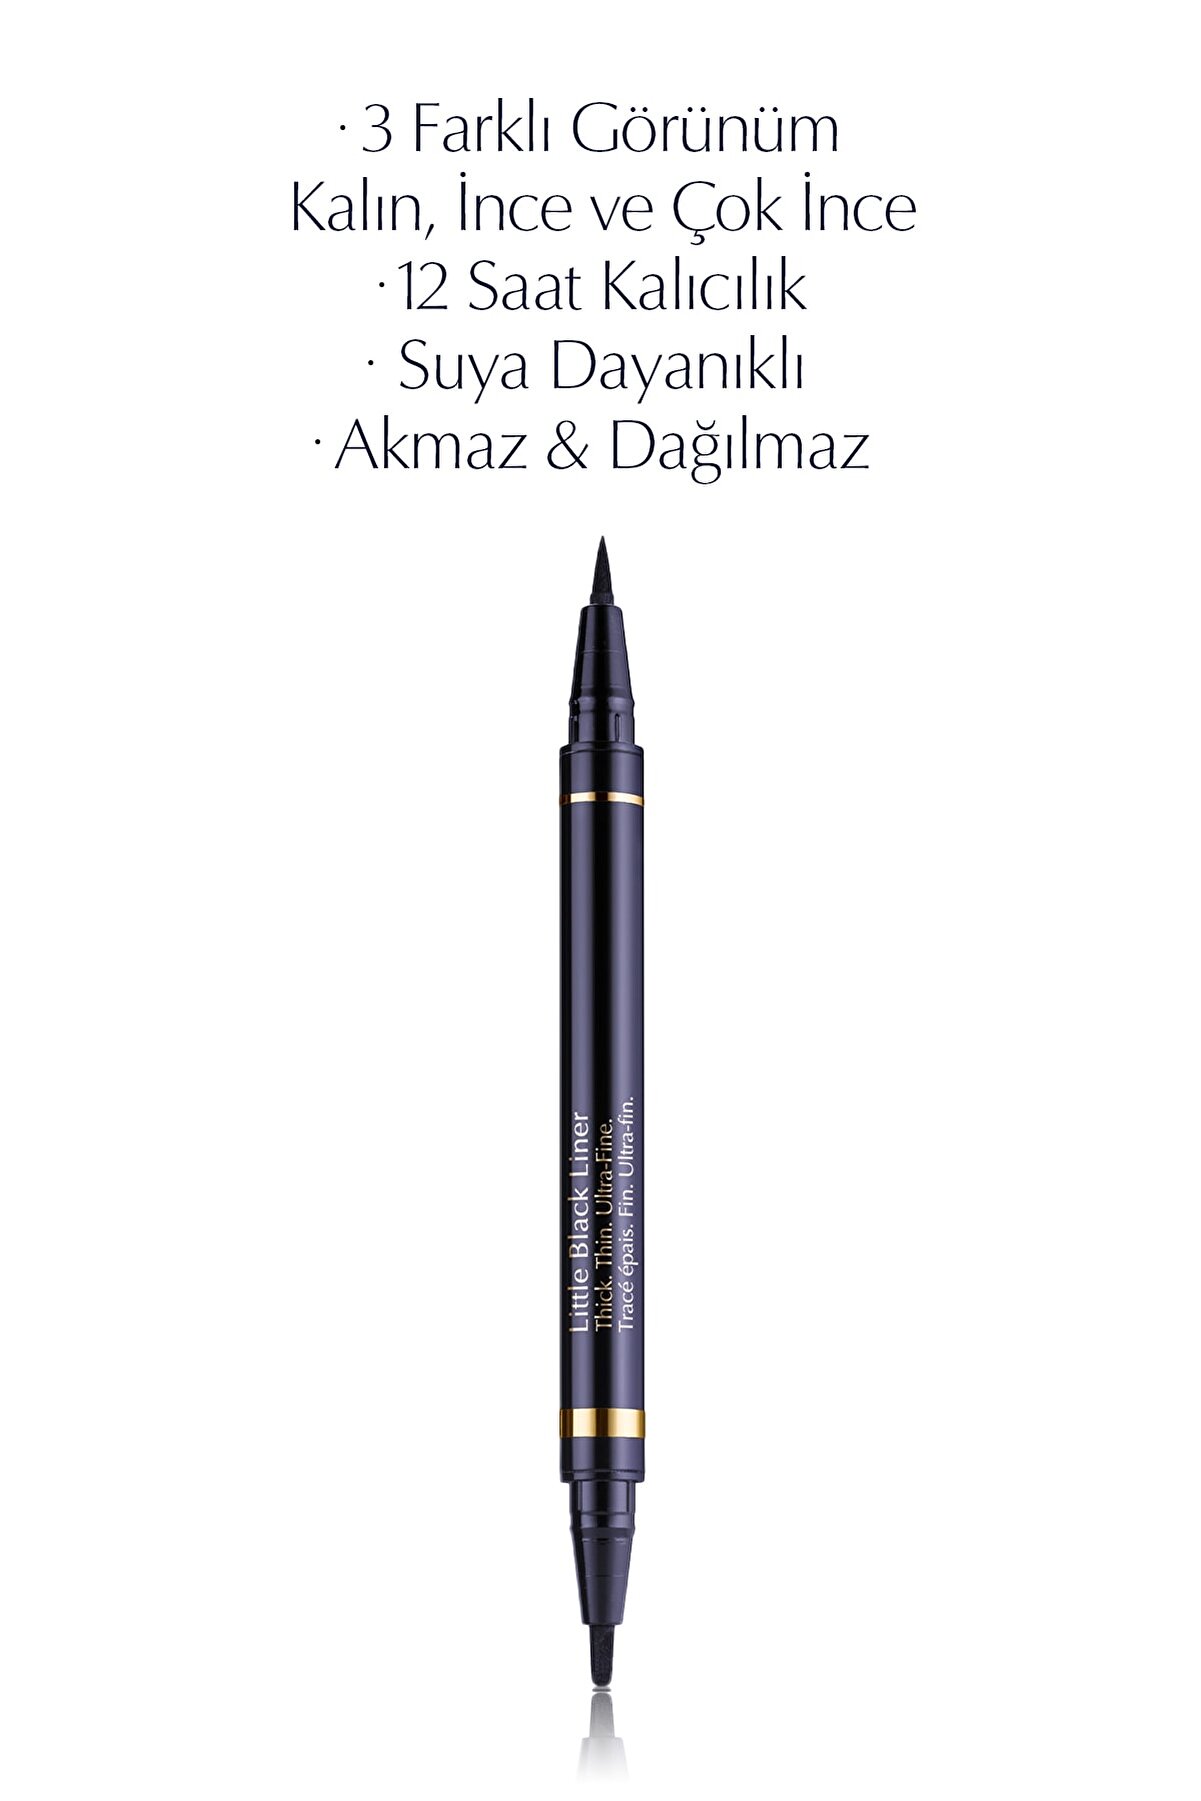 Estee Lauder Siyah Eyeliner - Little Black Liner 01 Onyx 9 g 887167147751